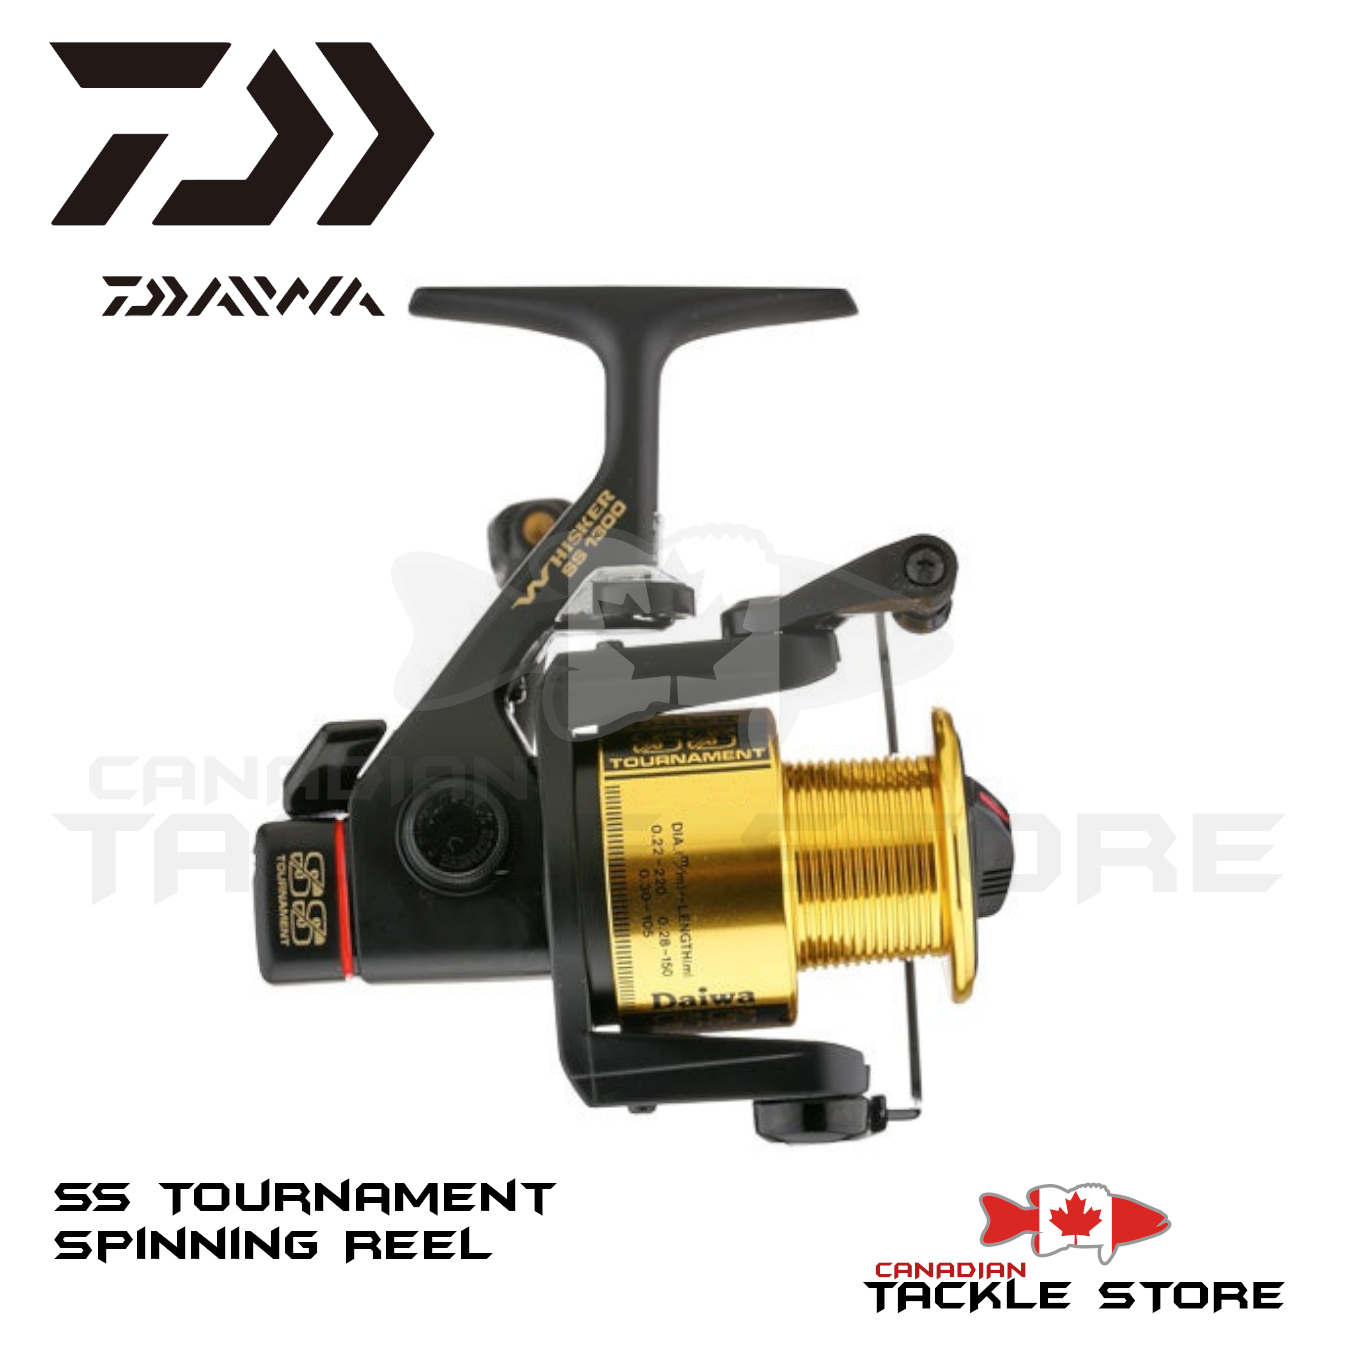 Daiwa SS1300 Tournament SS Spinning Reel